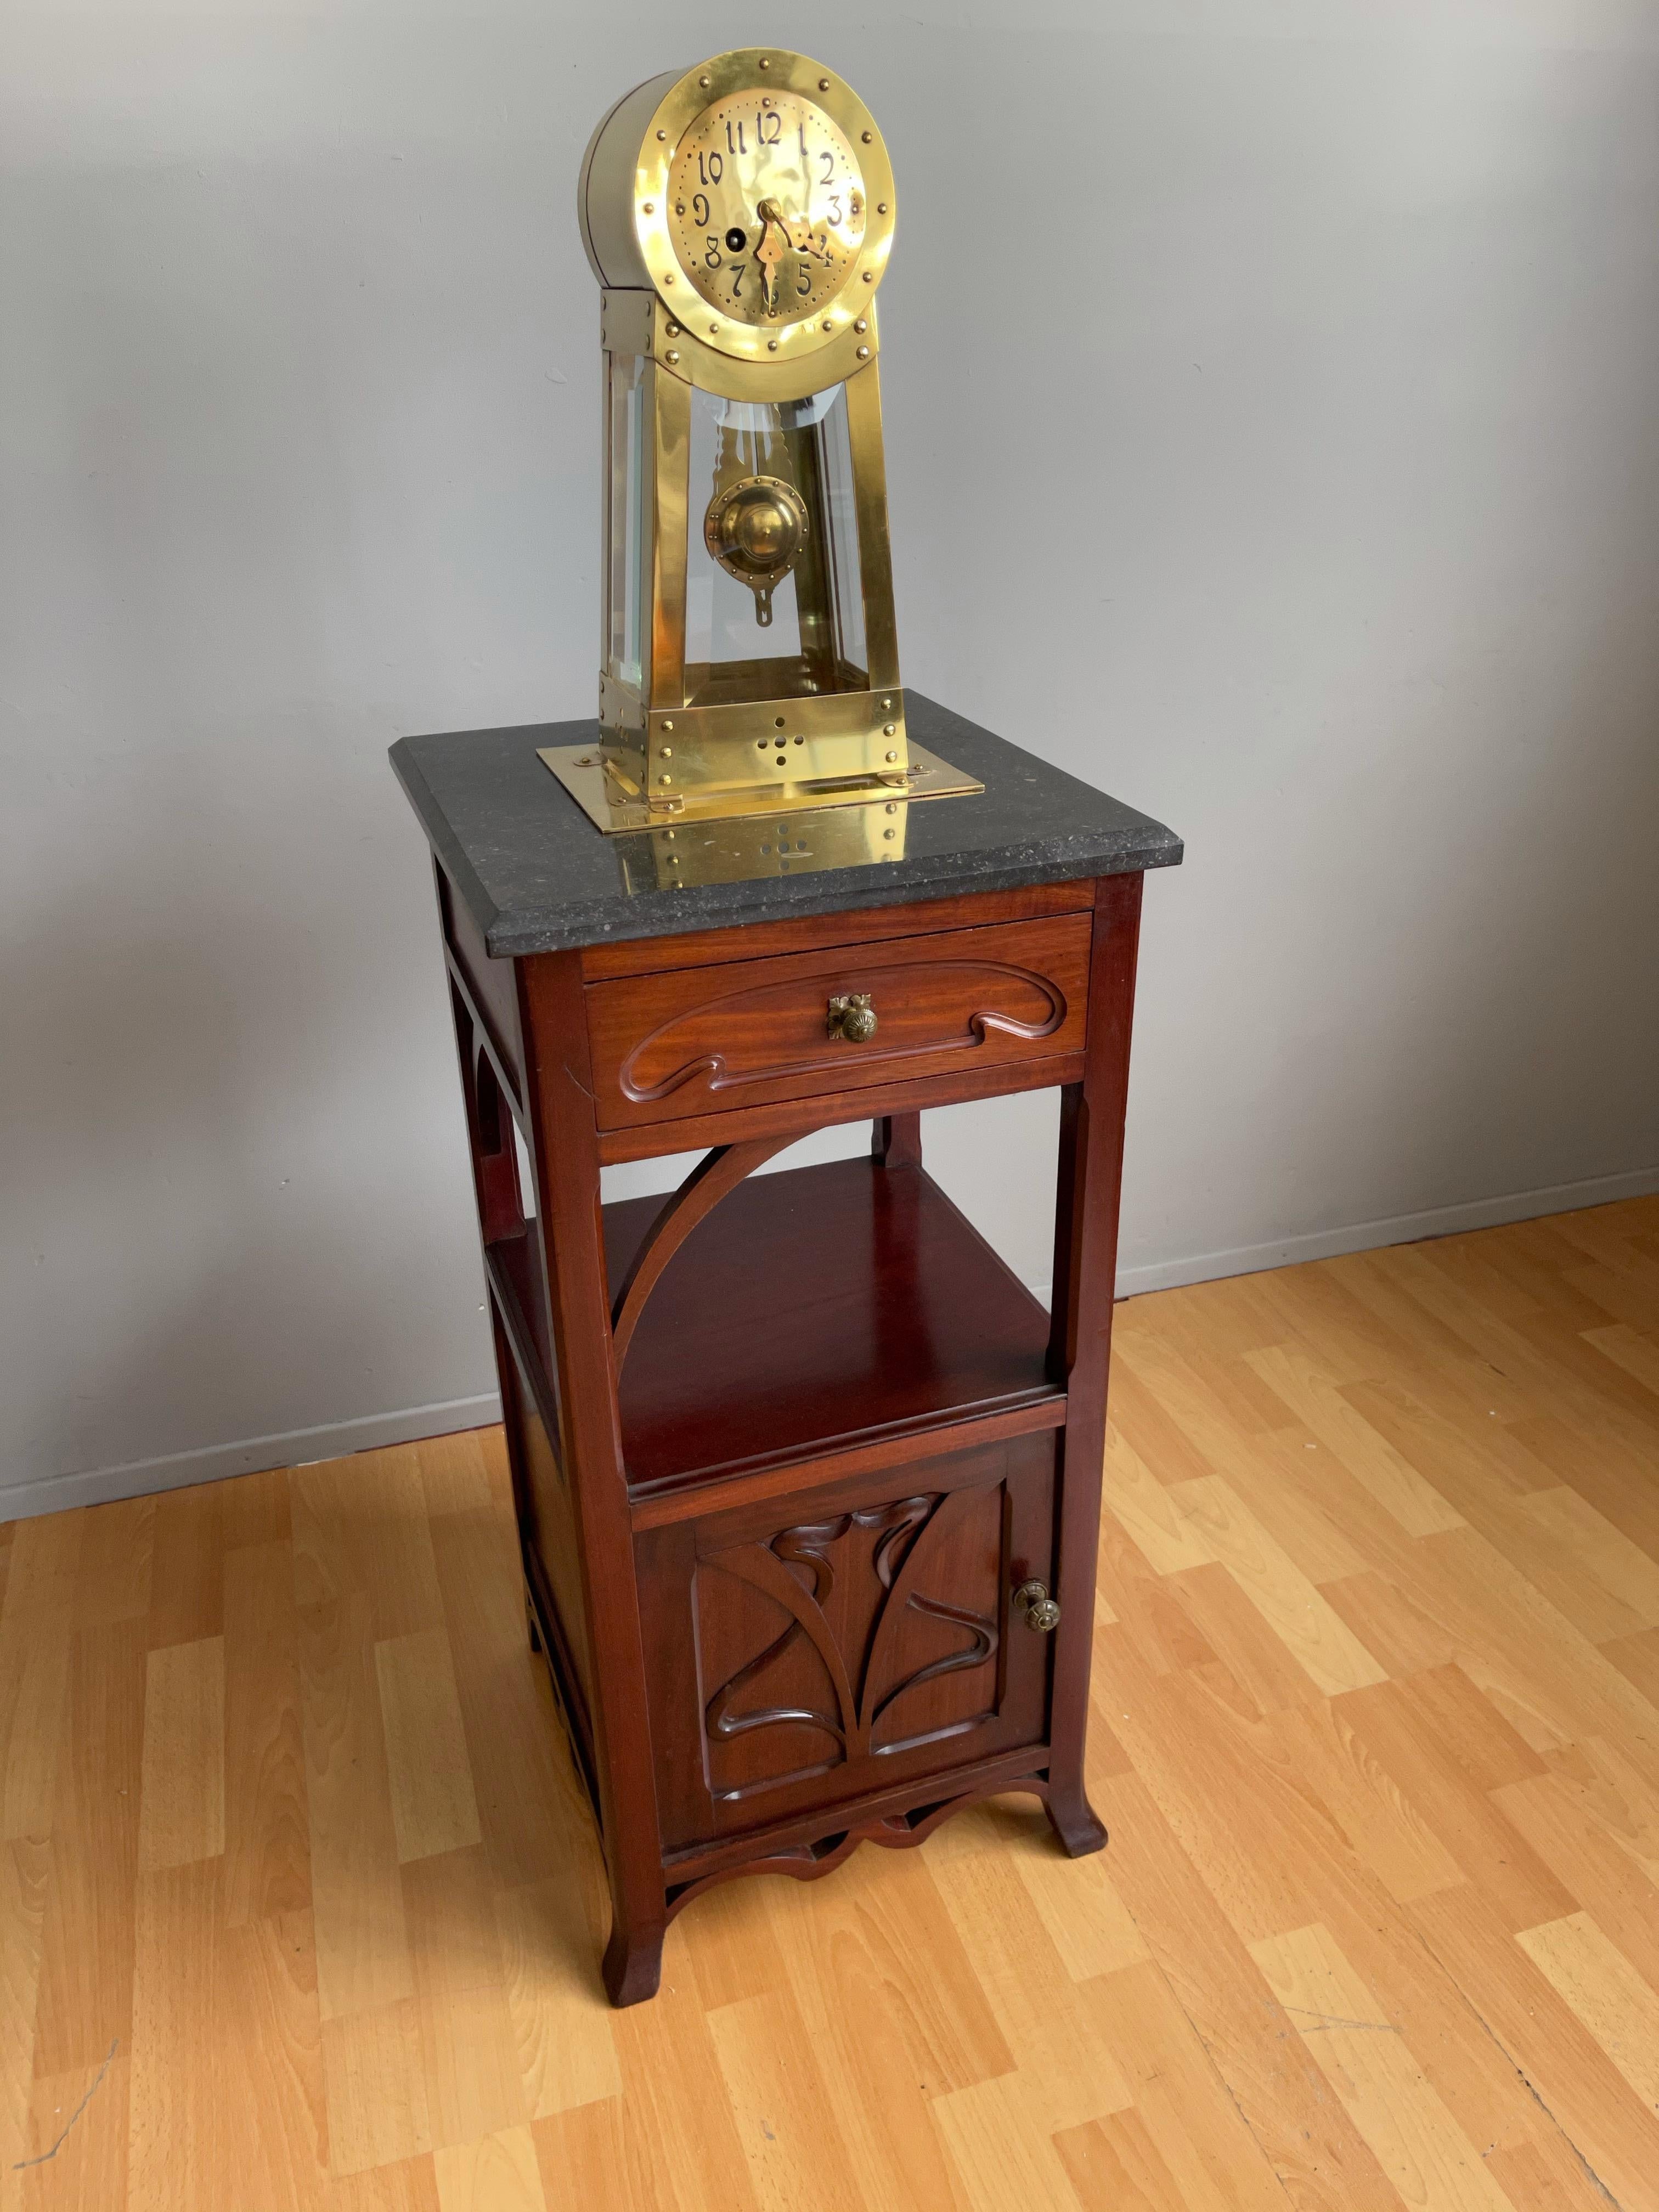 Dutch Modernist Design Hand Crafted Brass & Beveled Glass Table / Mantle Clock 13